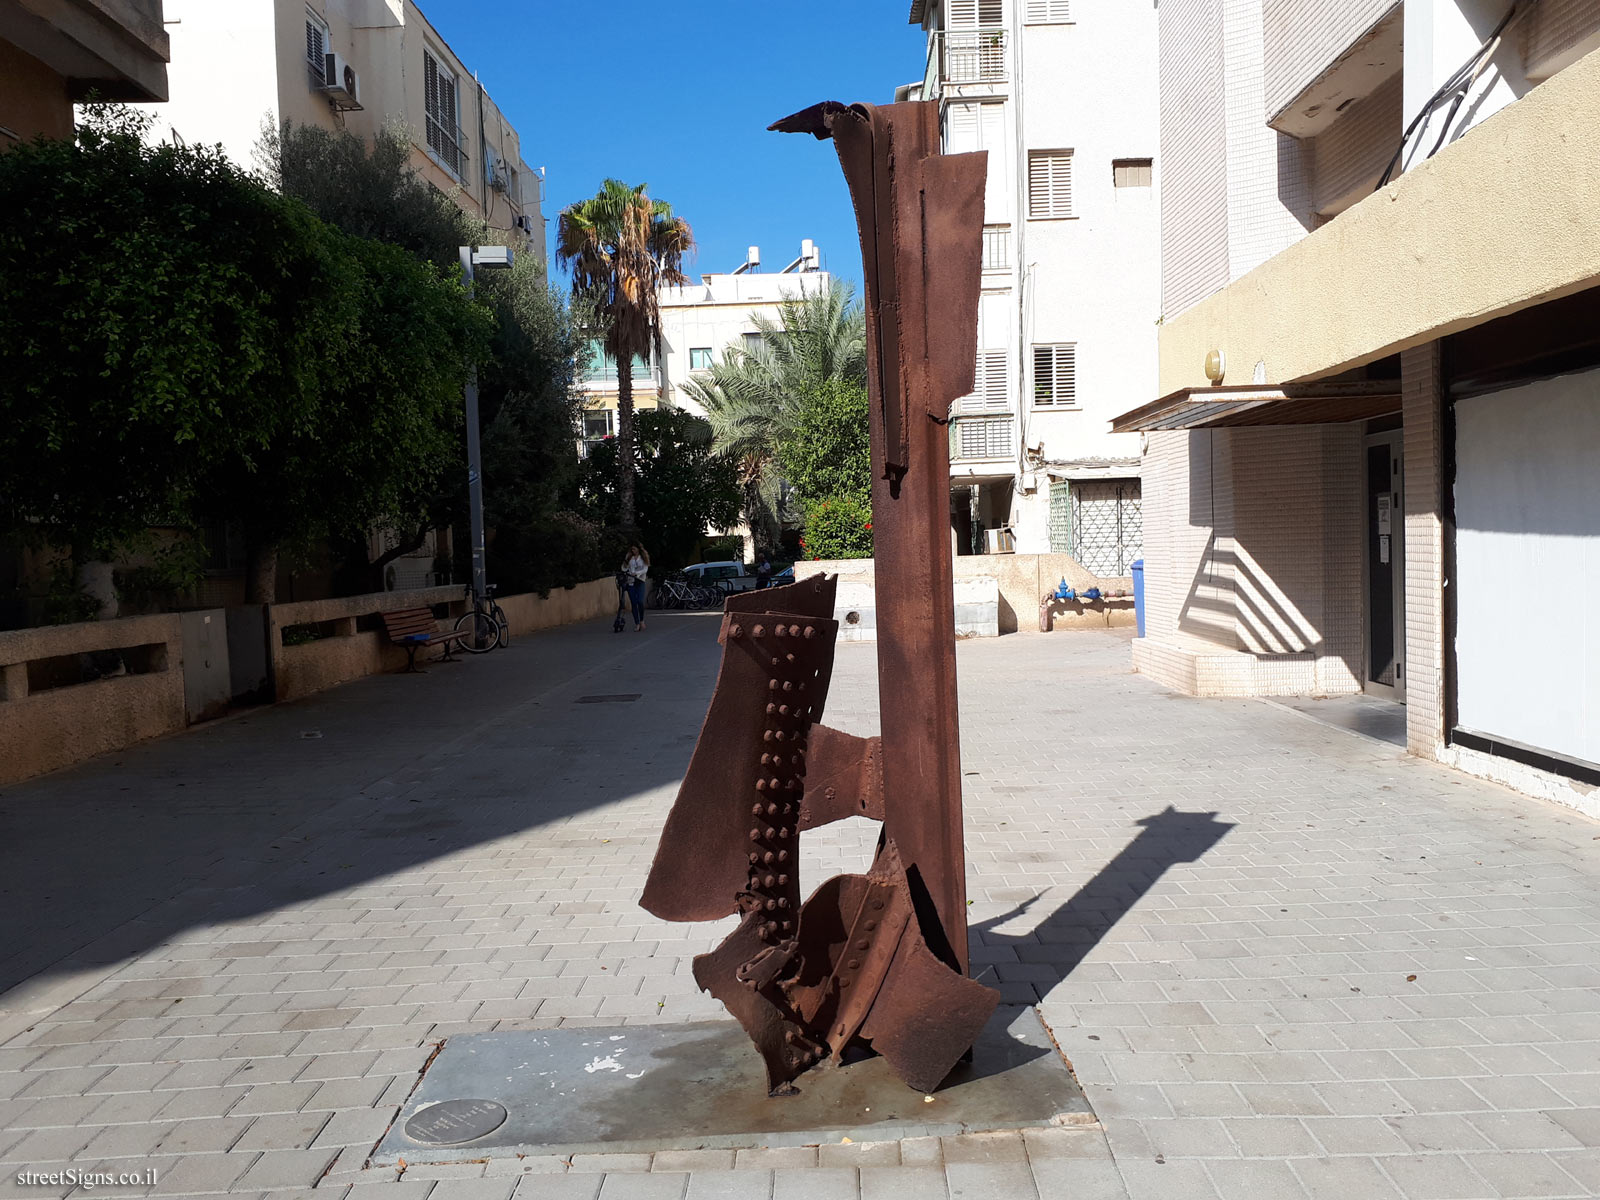 "Sculpture" - Outdoor sculpture by Yehiel Shemi - Simtat Mikha 4, Tel Aviv-Yafo, Israel